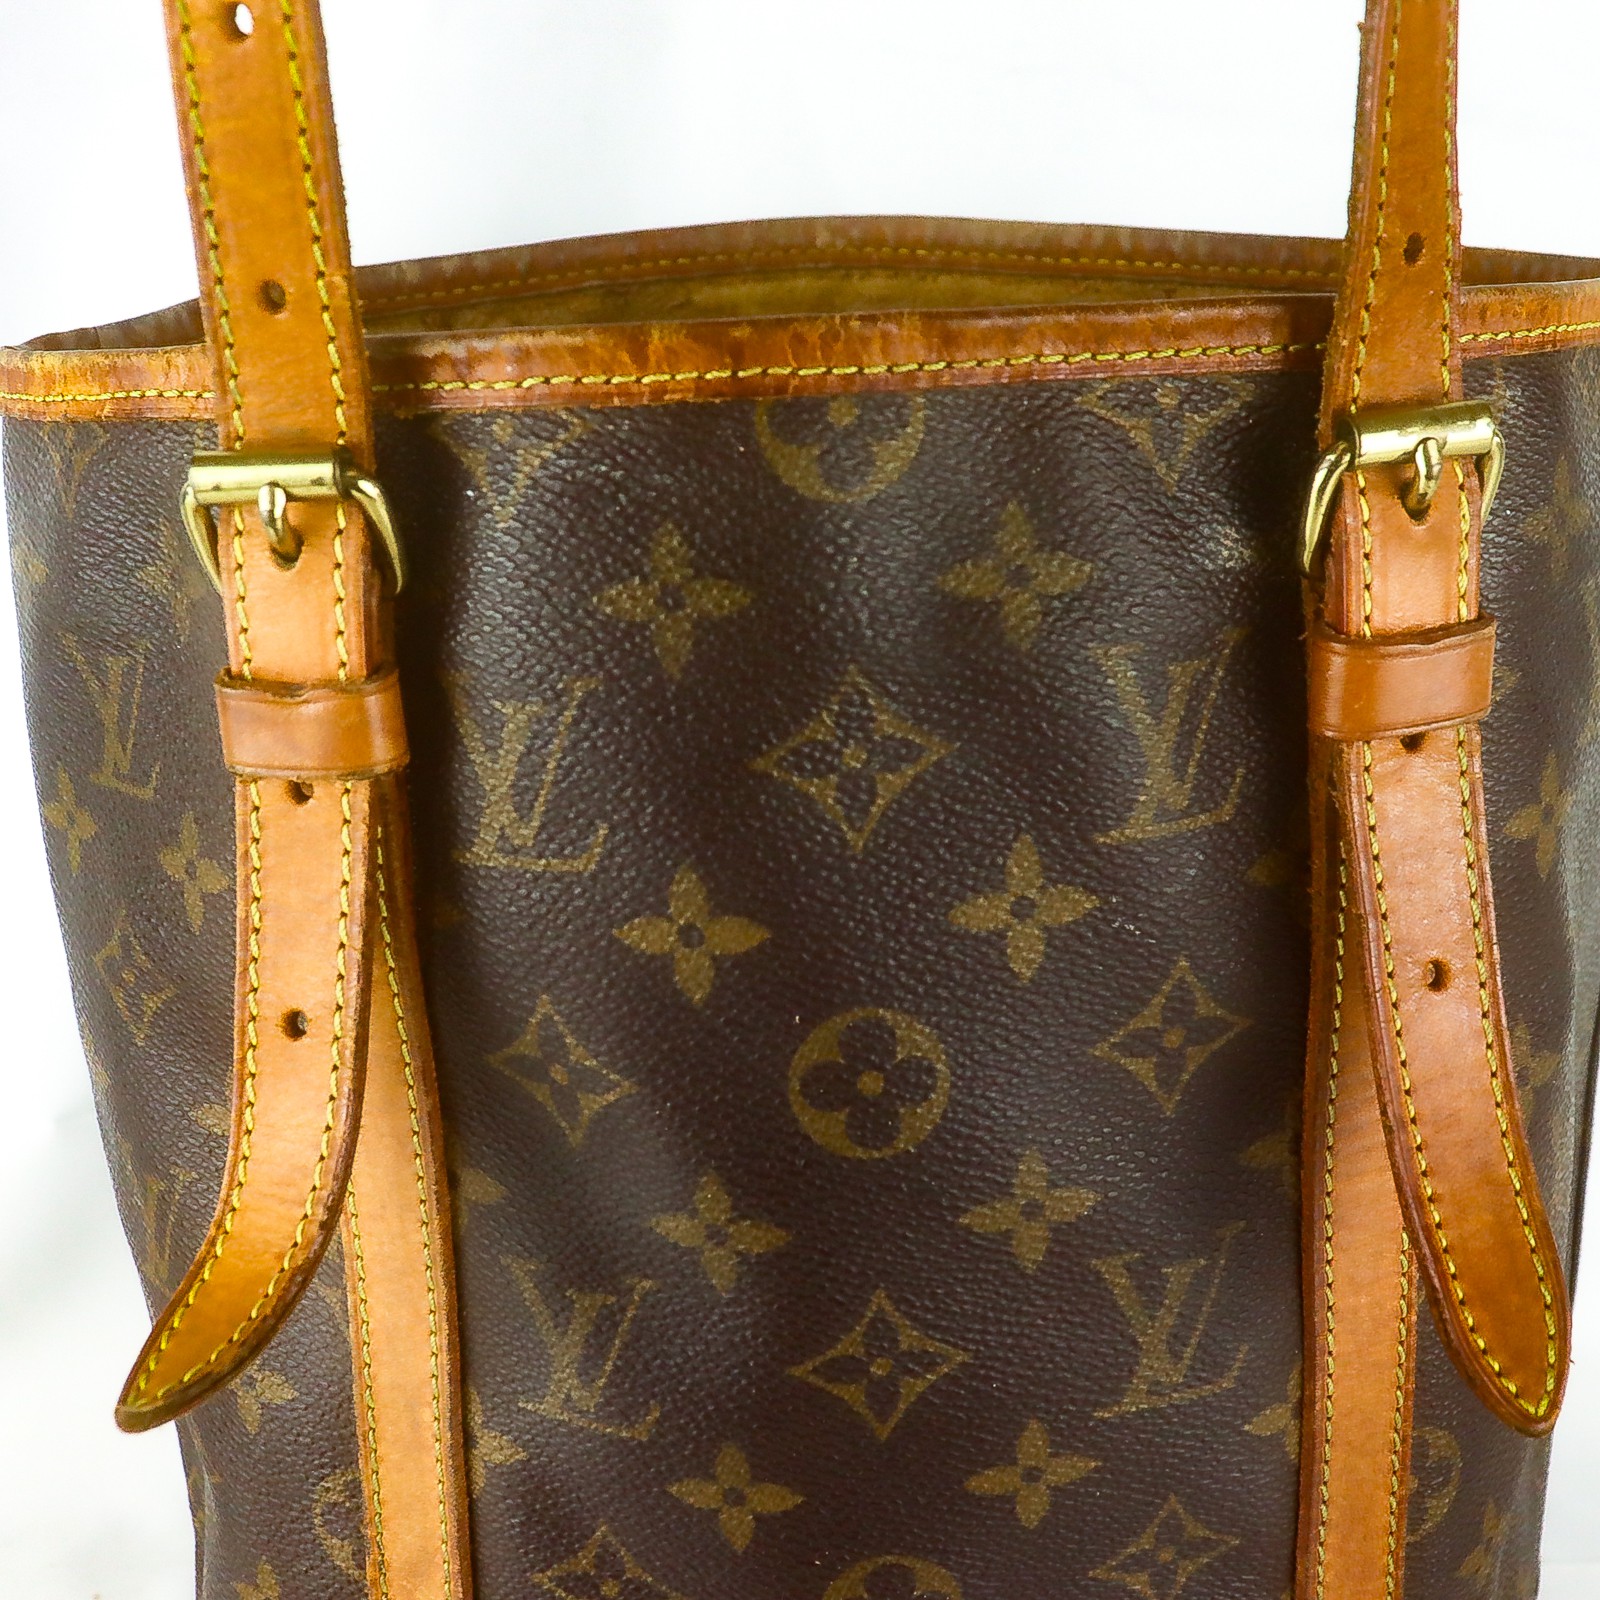 LOUIS VUITTON BUCKET GM Tote Bag Shoulder Bag Monogram M42236 JUNK | eBay